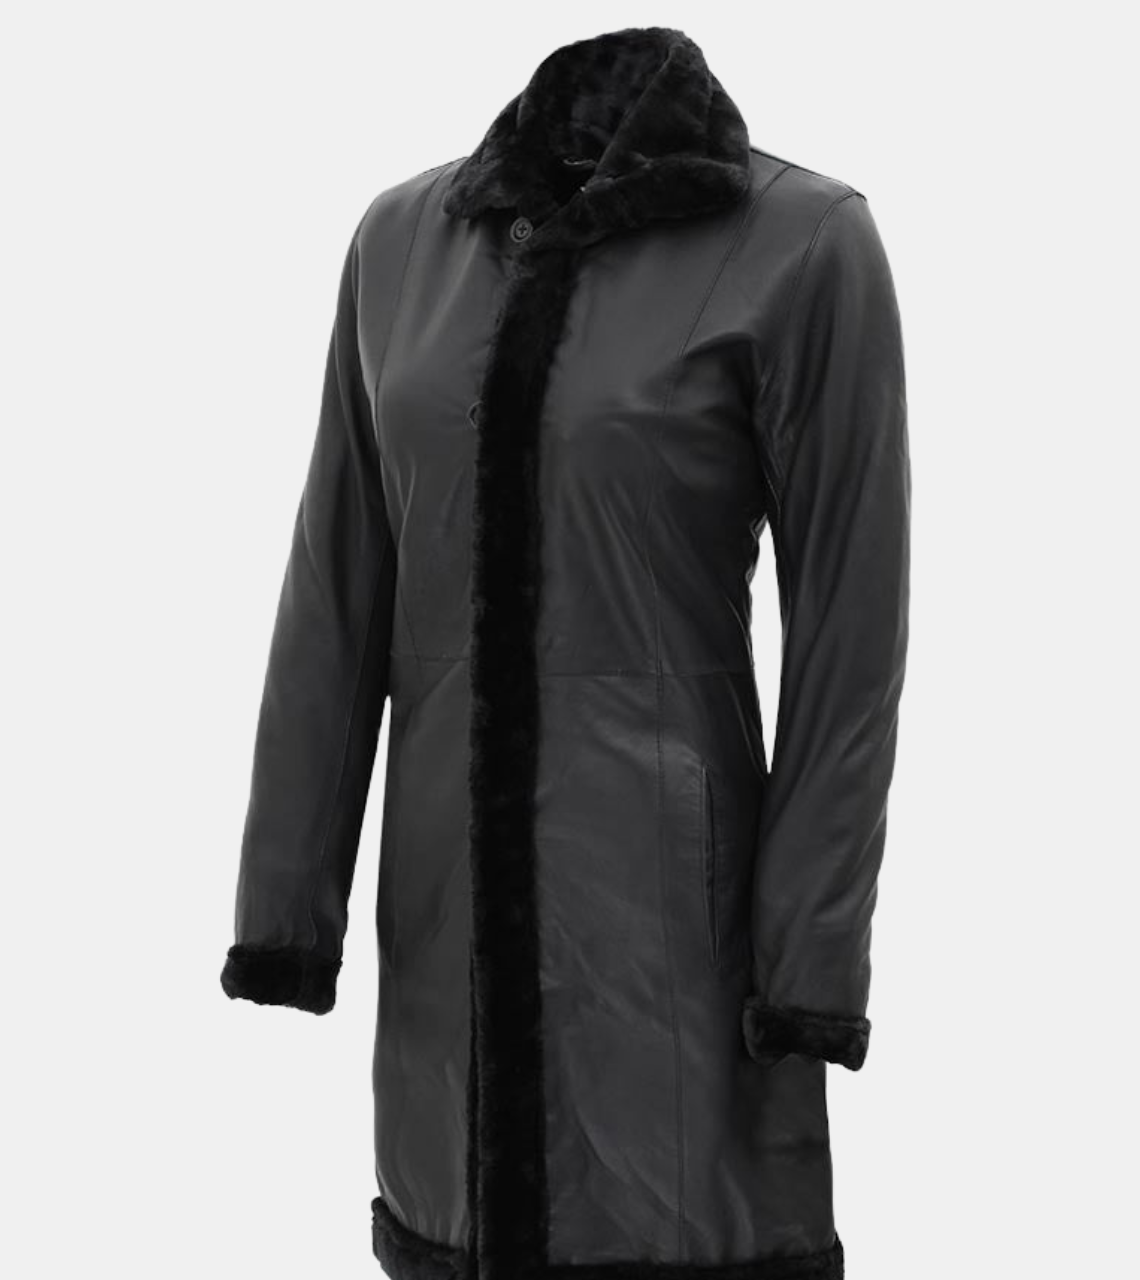  Black Shearling Leather Coat